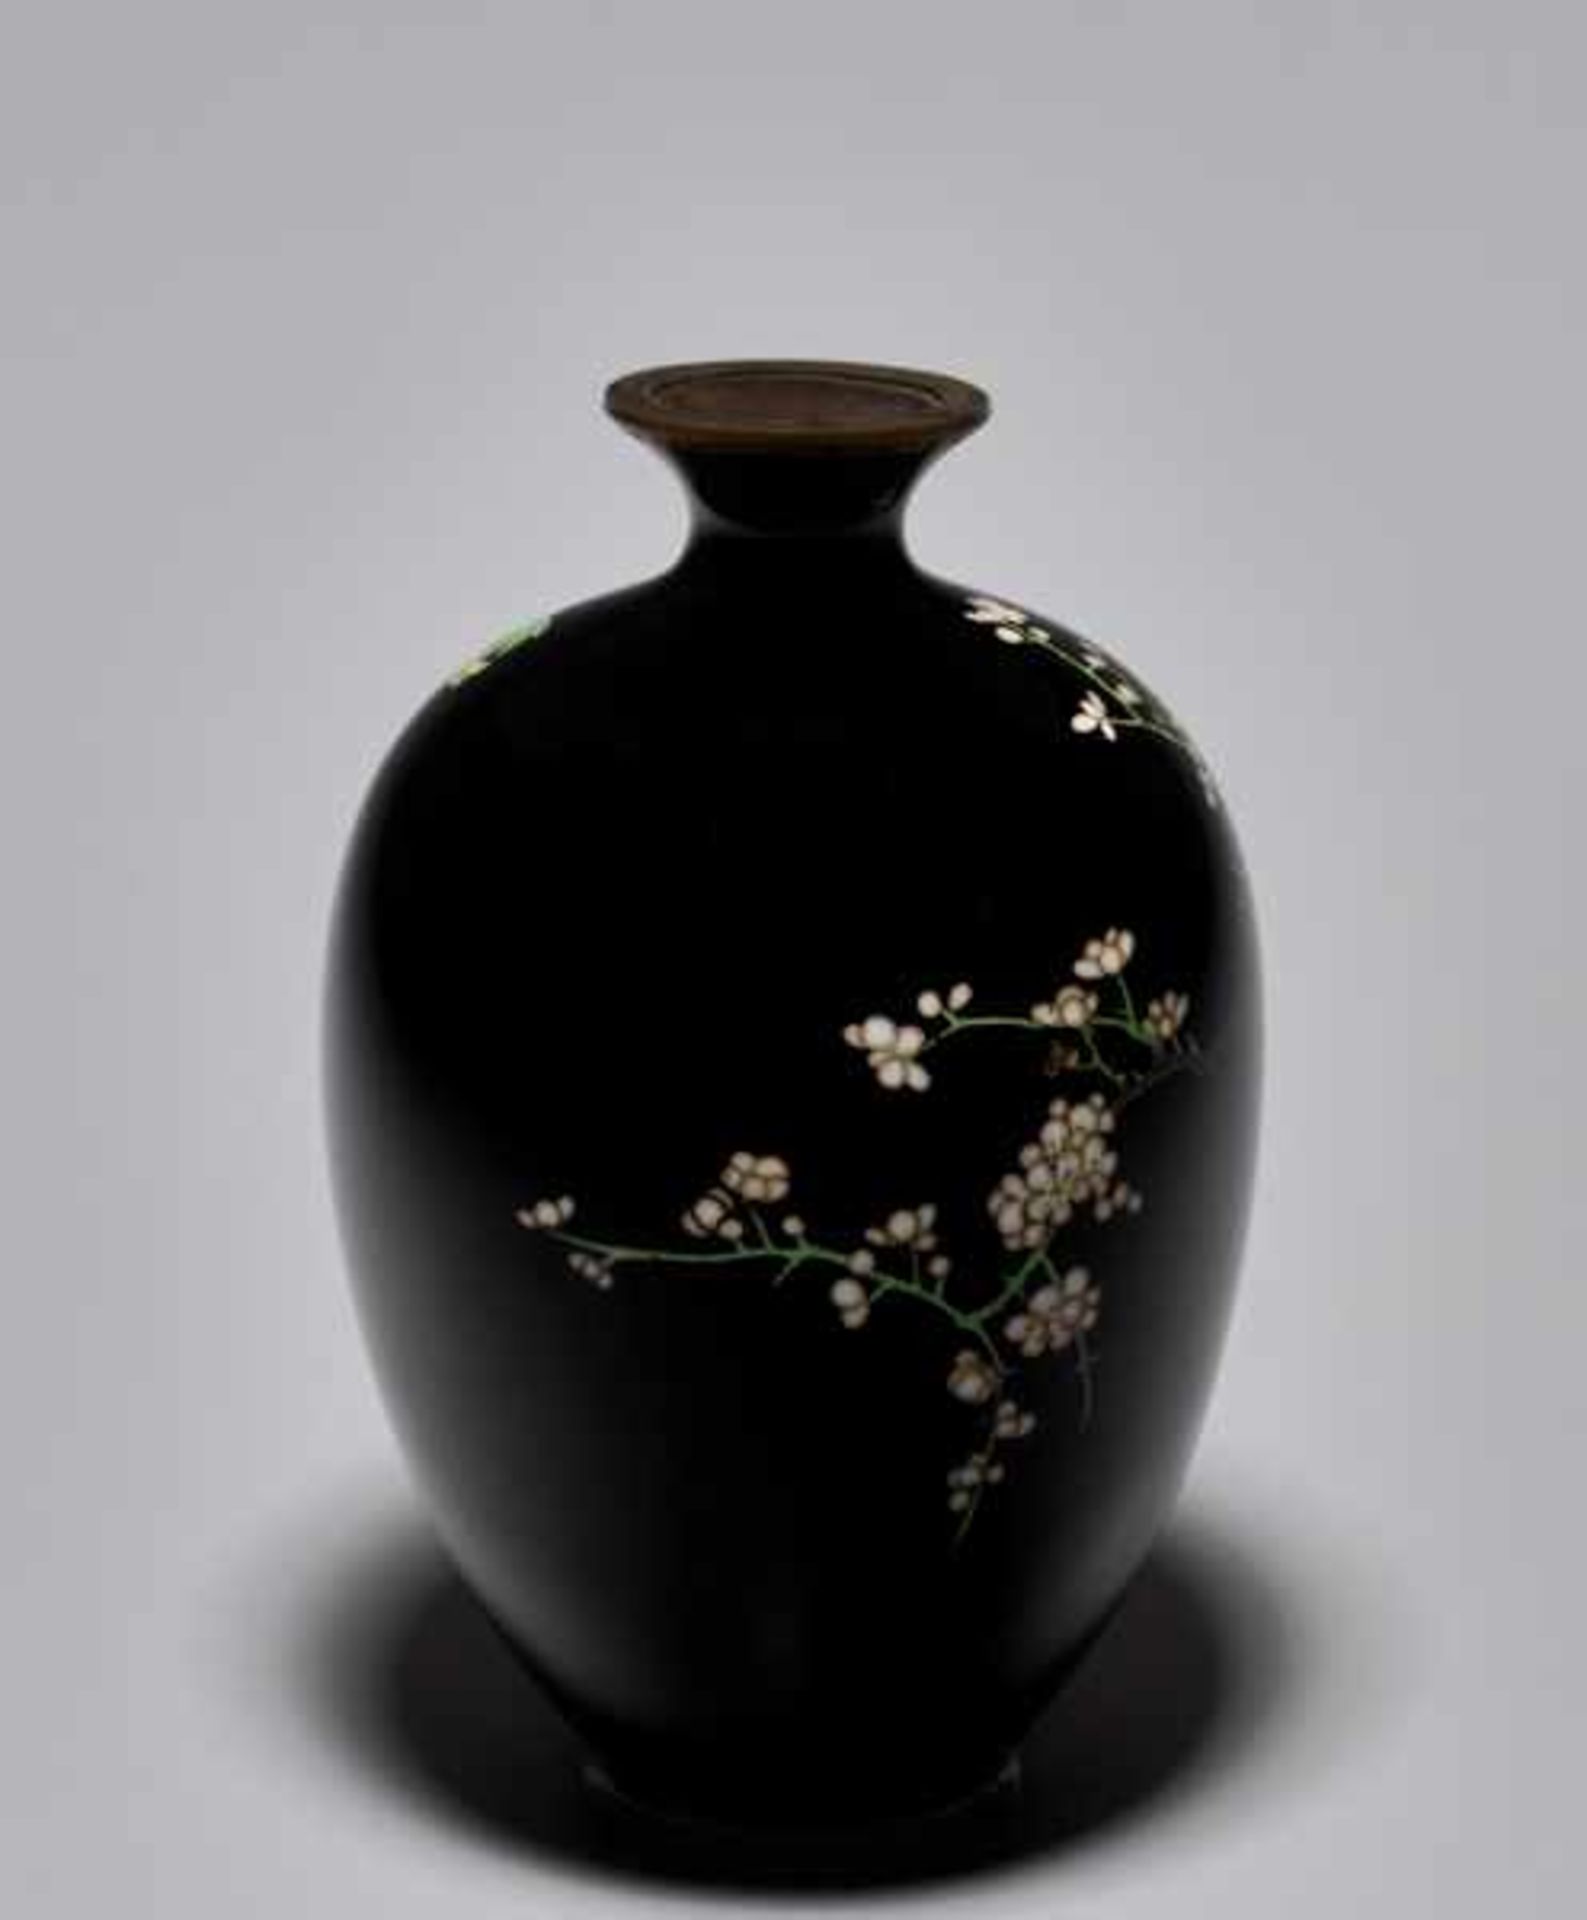 A PAIR OF SMALL CLOISONNÉ VASES WITH PLUM BLOSSOMS Colored enamel cloisonné. Japan, Meiji period - Image 8 of 9